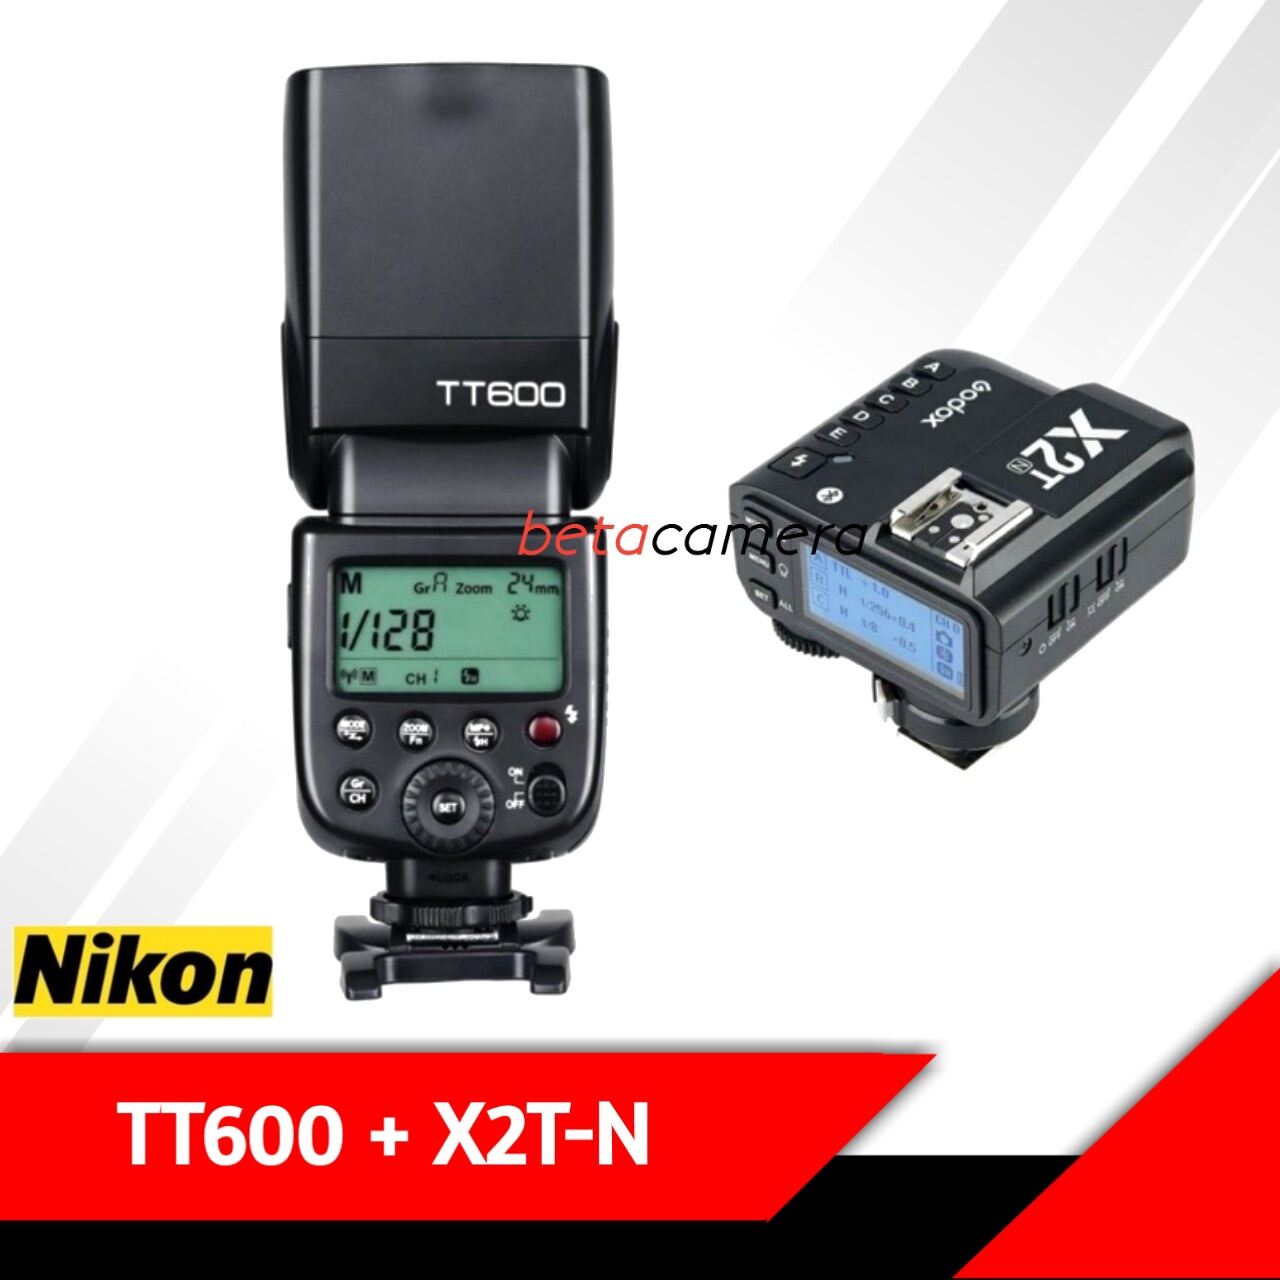 GetUSCart- GODOX TT600 External Flash for Canon/Nikon/Pentax